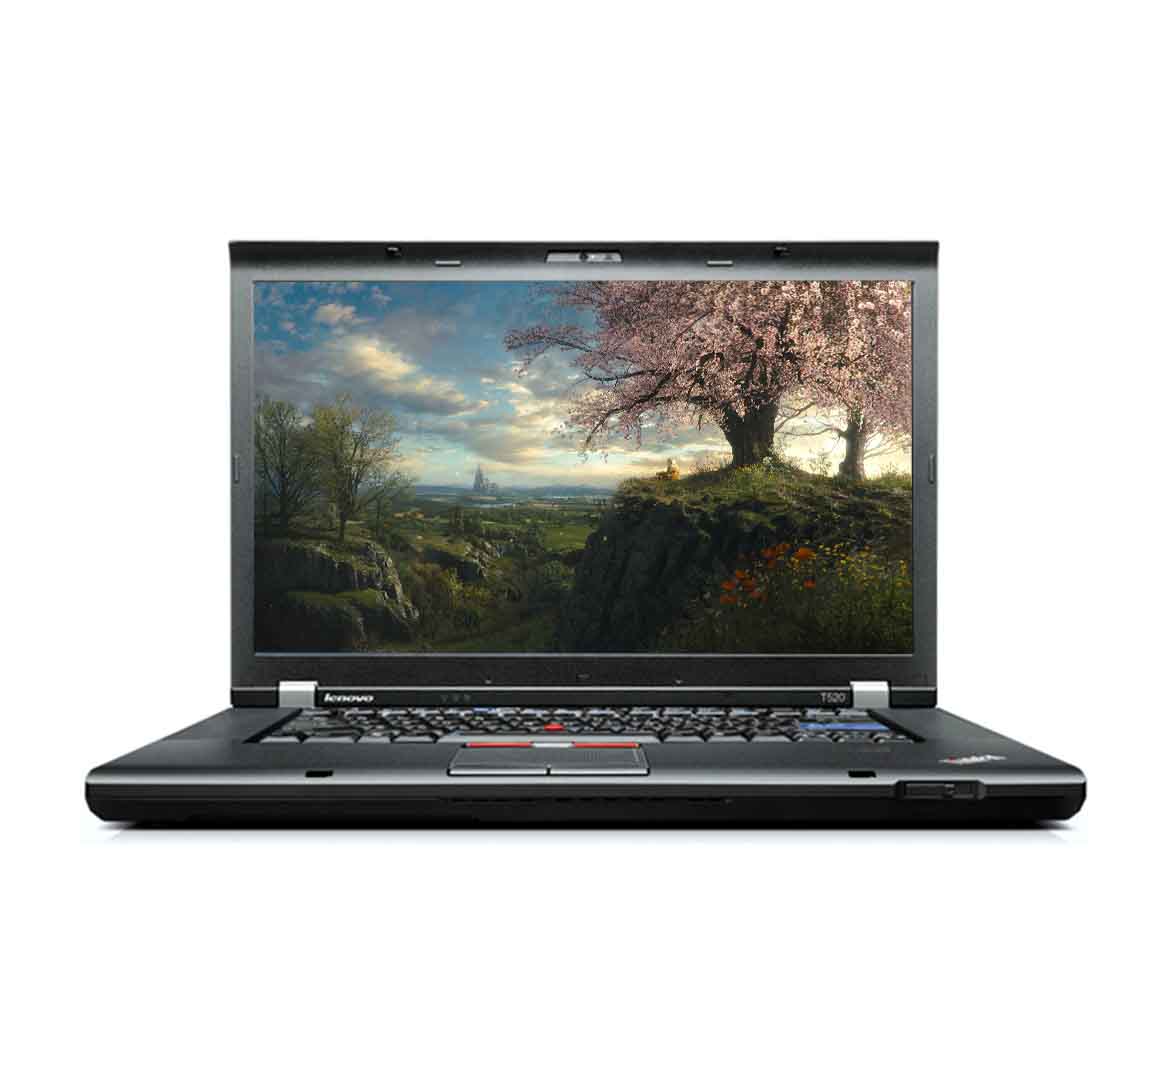 Lenovo ThinkPad T520 Business Laptop, Intel Core i5-2nd Generation CPU, 8GB RAM, 256GB SSD, 15 inch Display, Windows 10 Pro